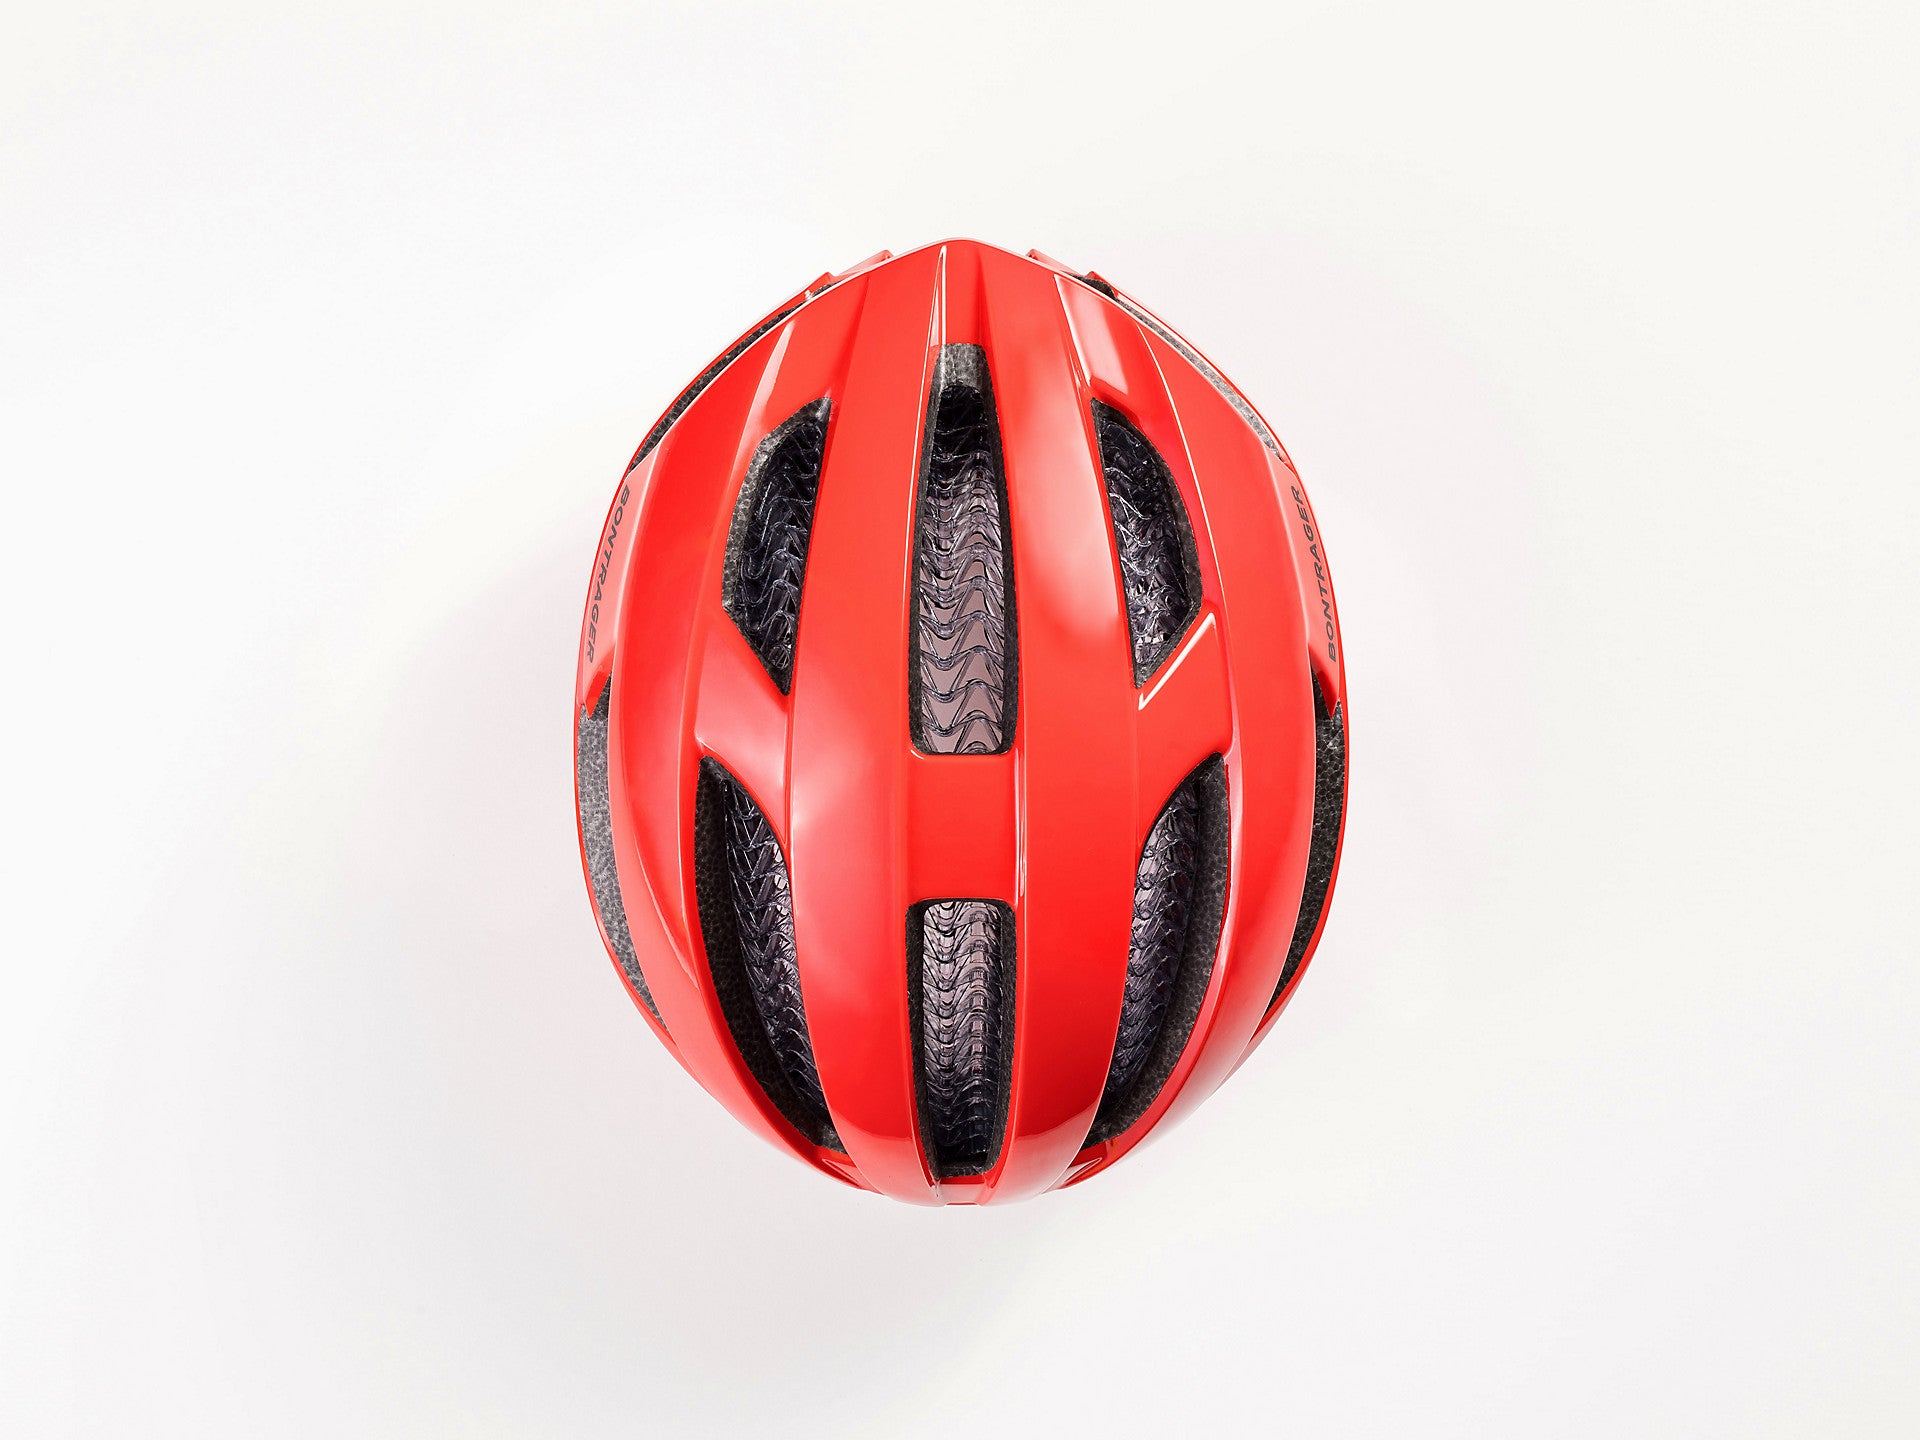 Bontrager Specter WaveCel Cycling Helmet（スペクター ウェーブセル